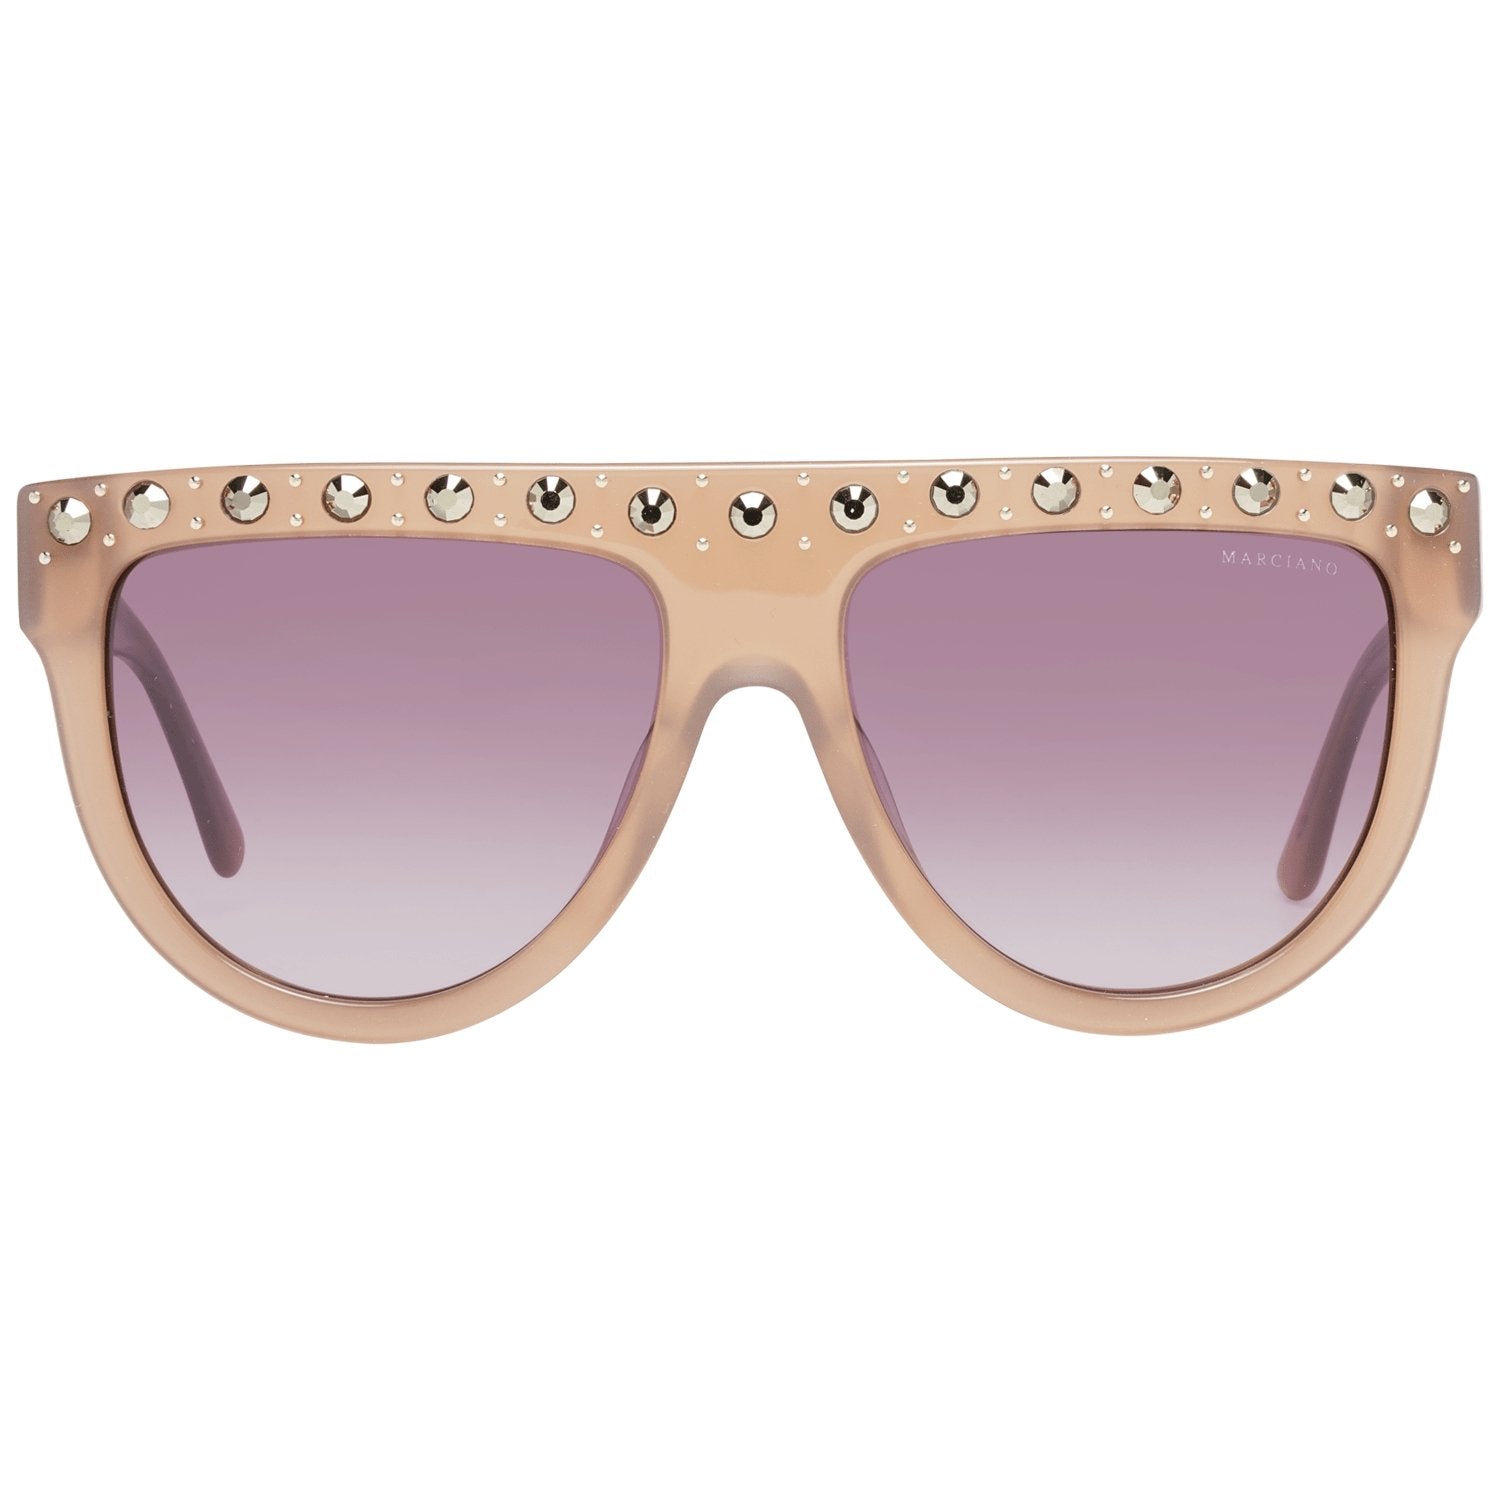 Marciano by Guess Pink Women Sunglasses - Fizigo